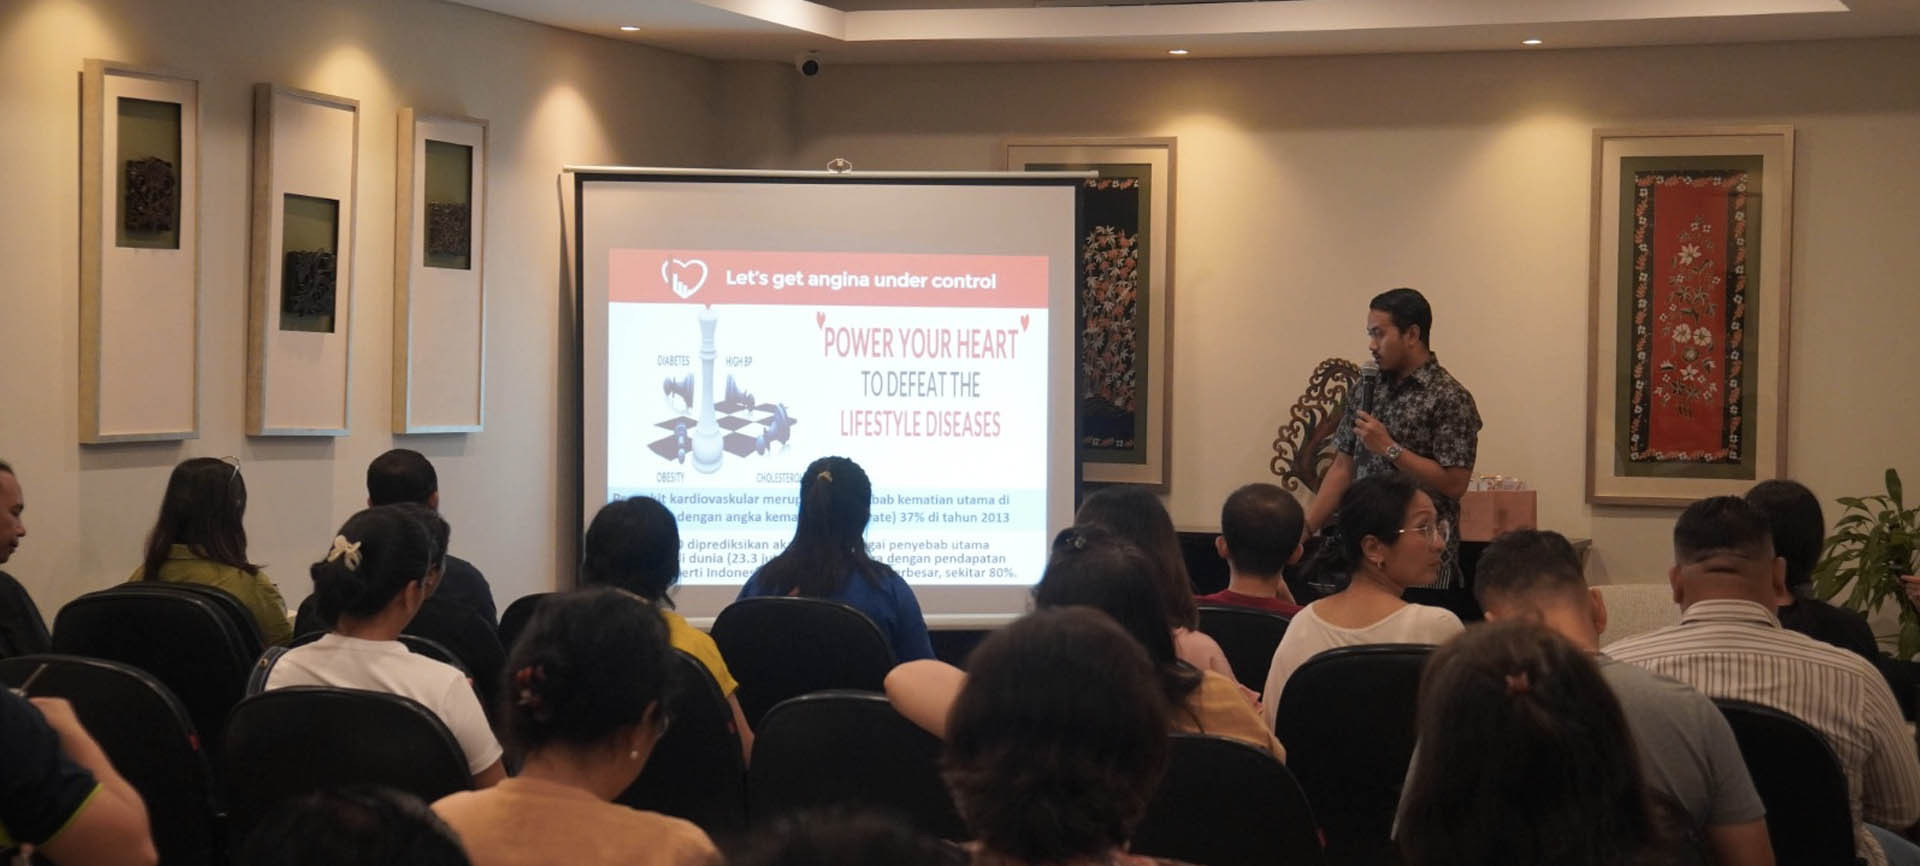 Kolaborasi Bank Lestari Bali dan BIMC: Mengedukasi Masyarakat Tentang Resiko dan Cara Cegah Penyakit Jantung 